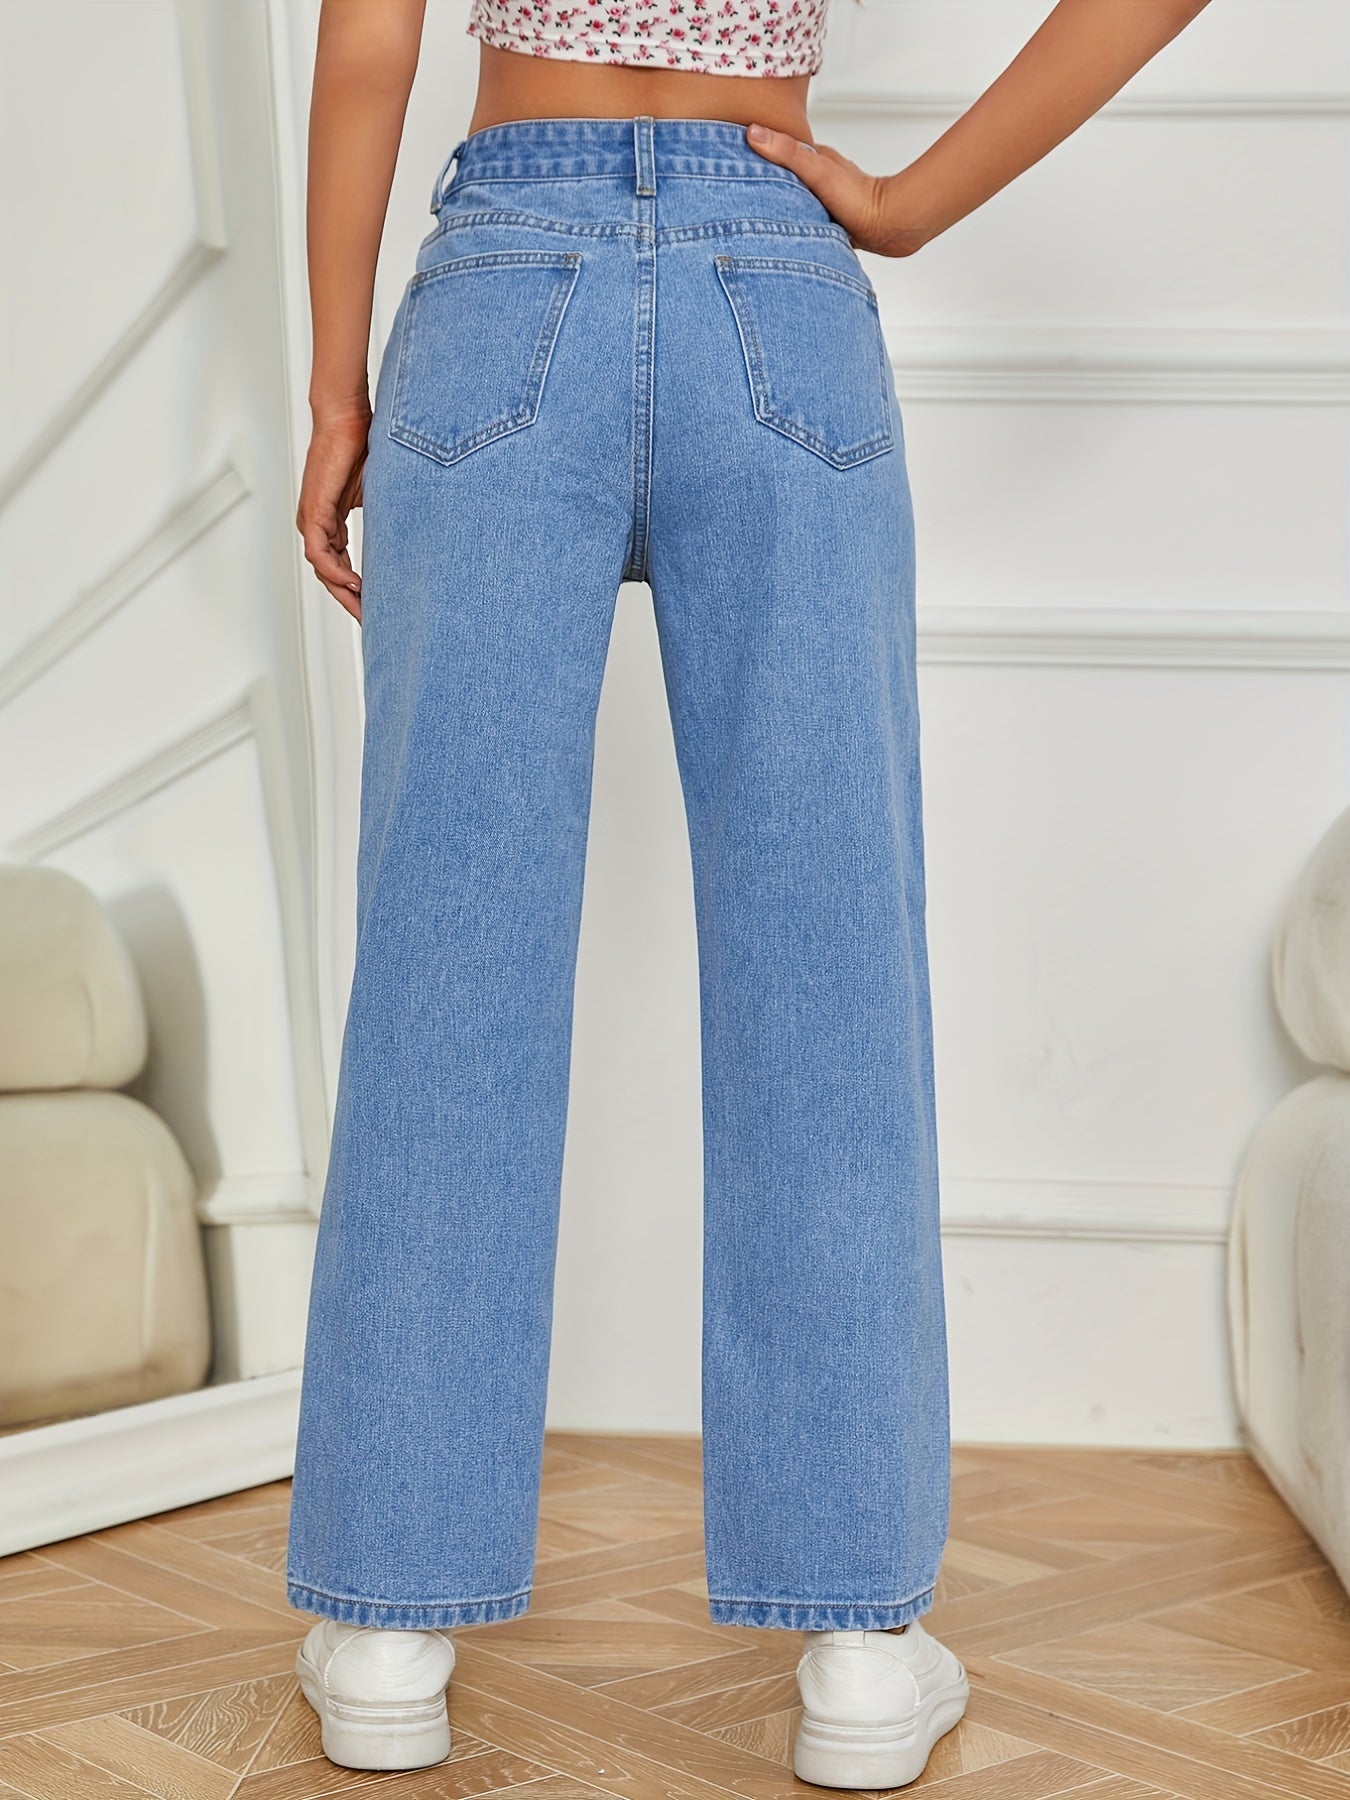 「lovevop」Light Blue Casual Straight Jeans, Non-Stretch Loose Fit Slash Pockets Denim Pants, Women's Denim Jeans & Clothing